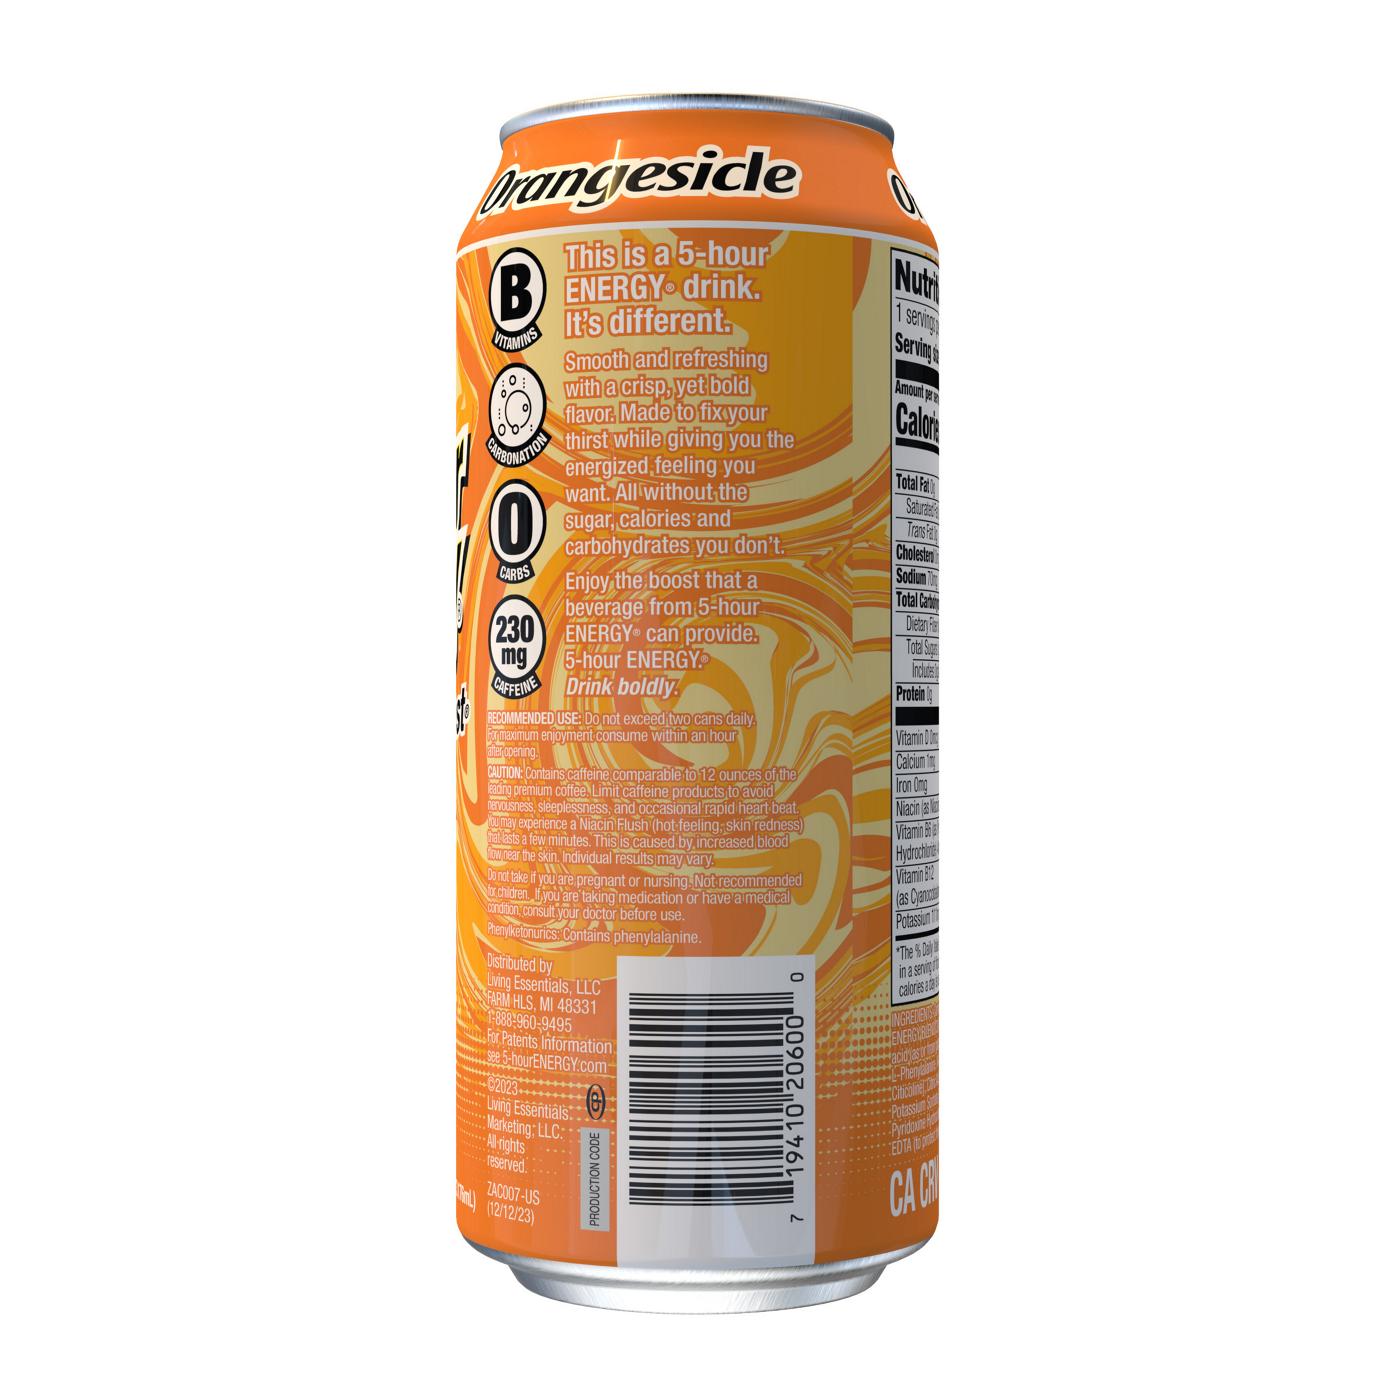 5-hour ENERGY Extra Strength Energy Drink - Orangesicle; image 2 of 3